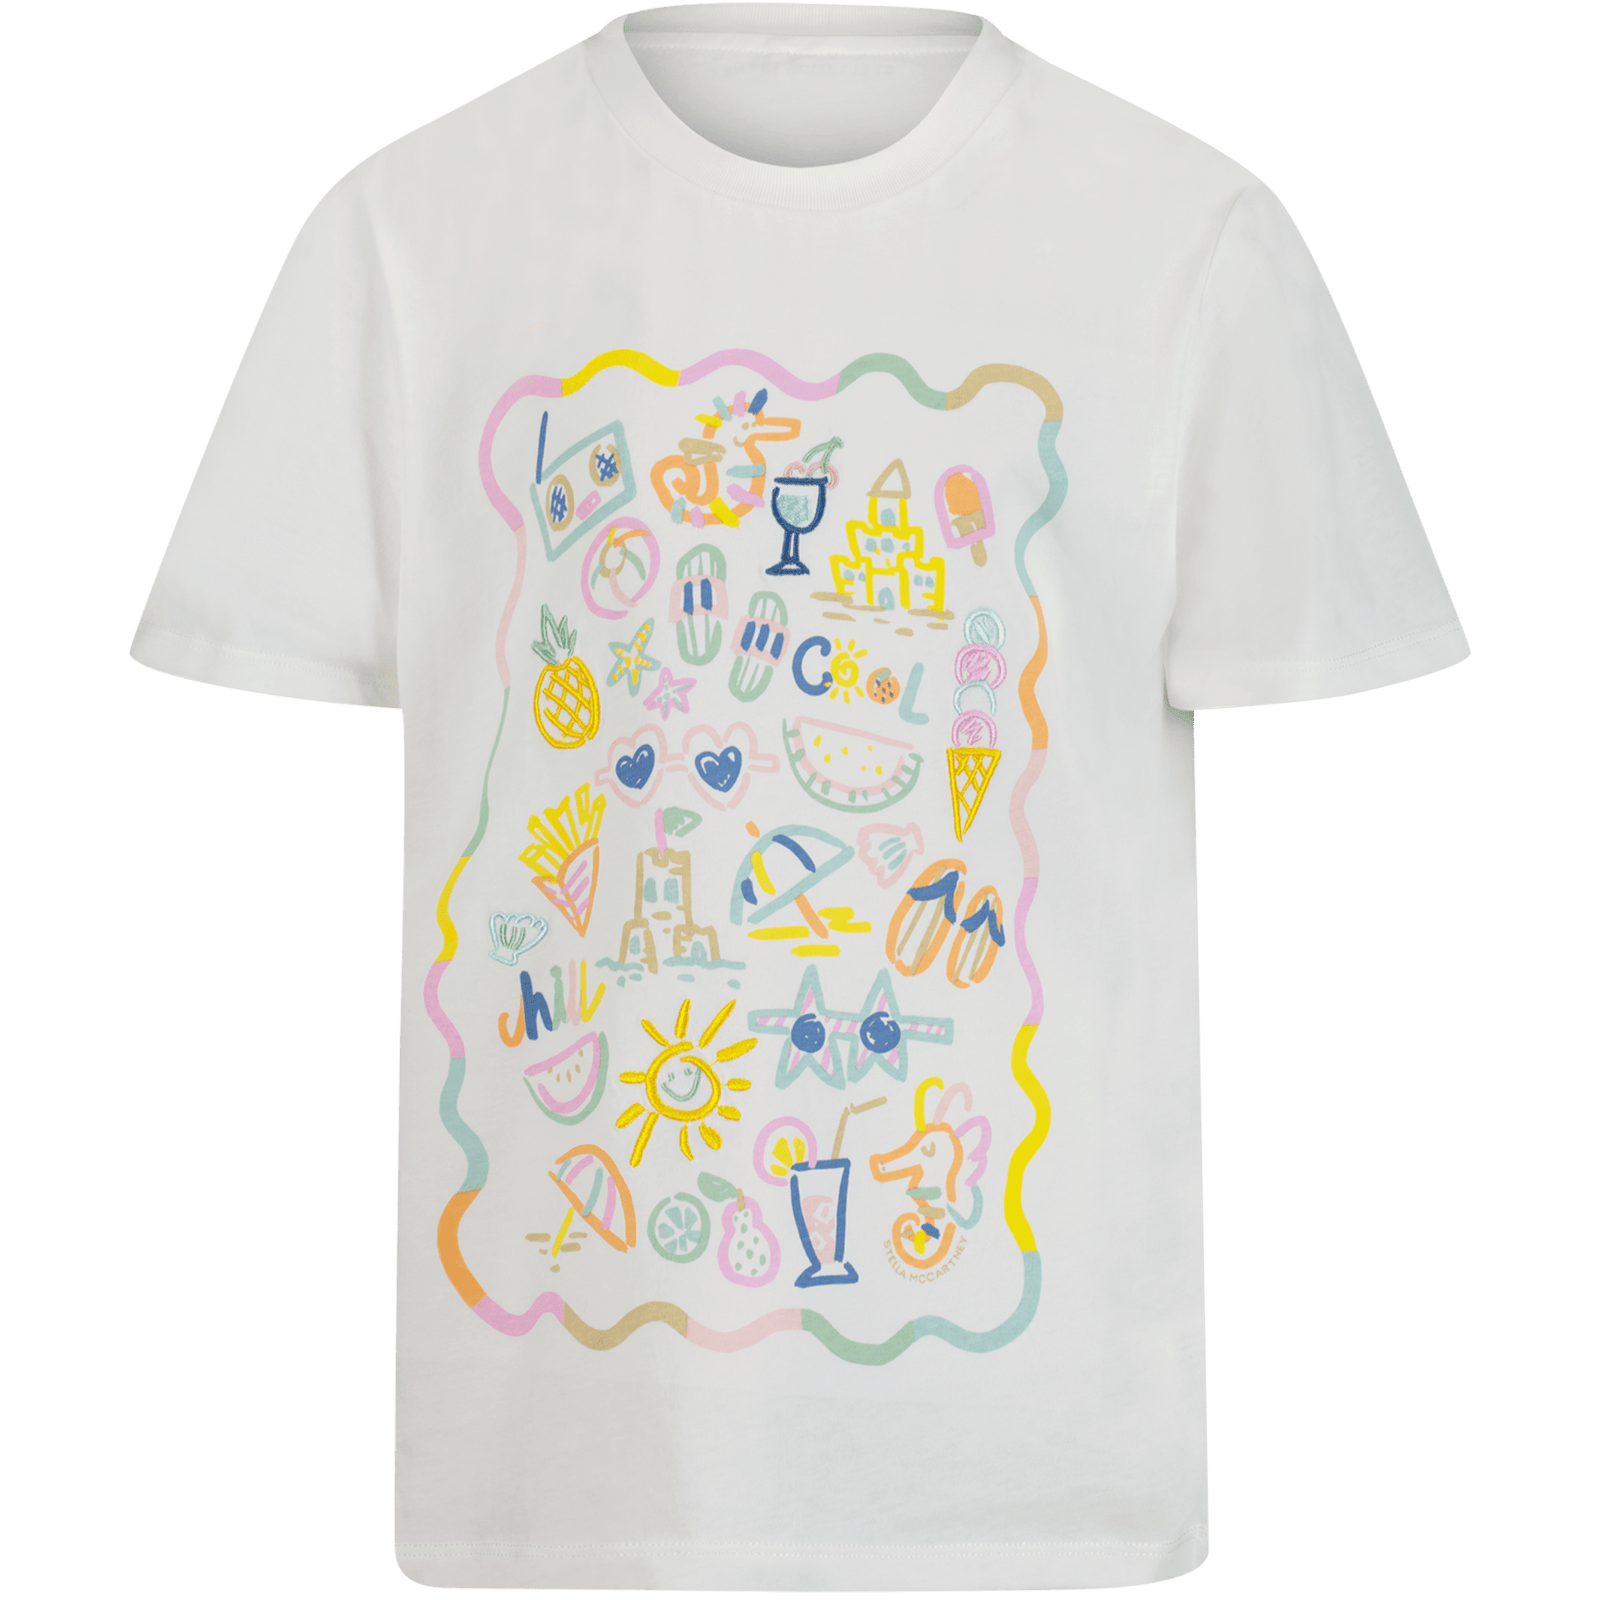 Stella McCartney Kinder Meisjes T-Shirt Off White 4Y